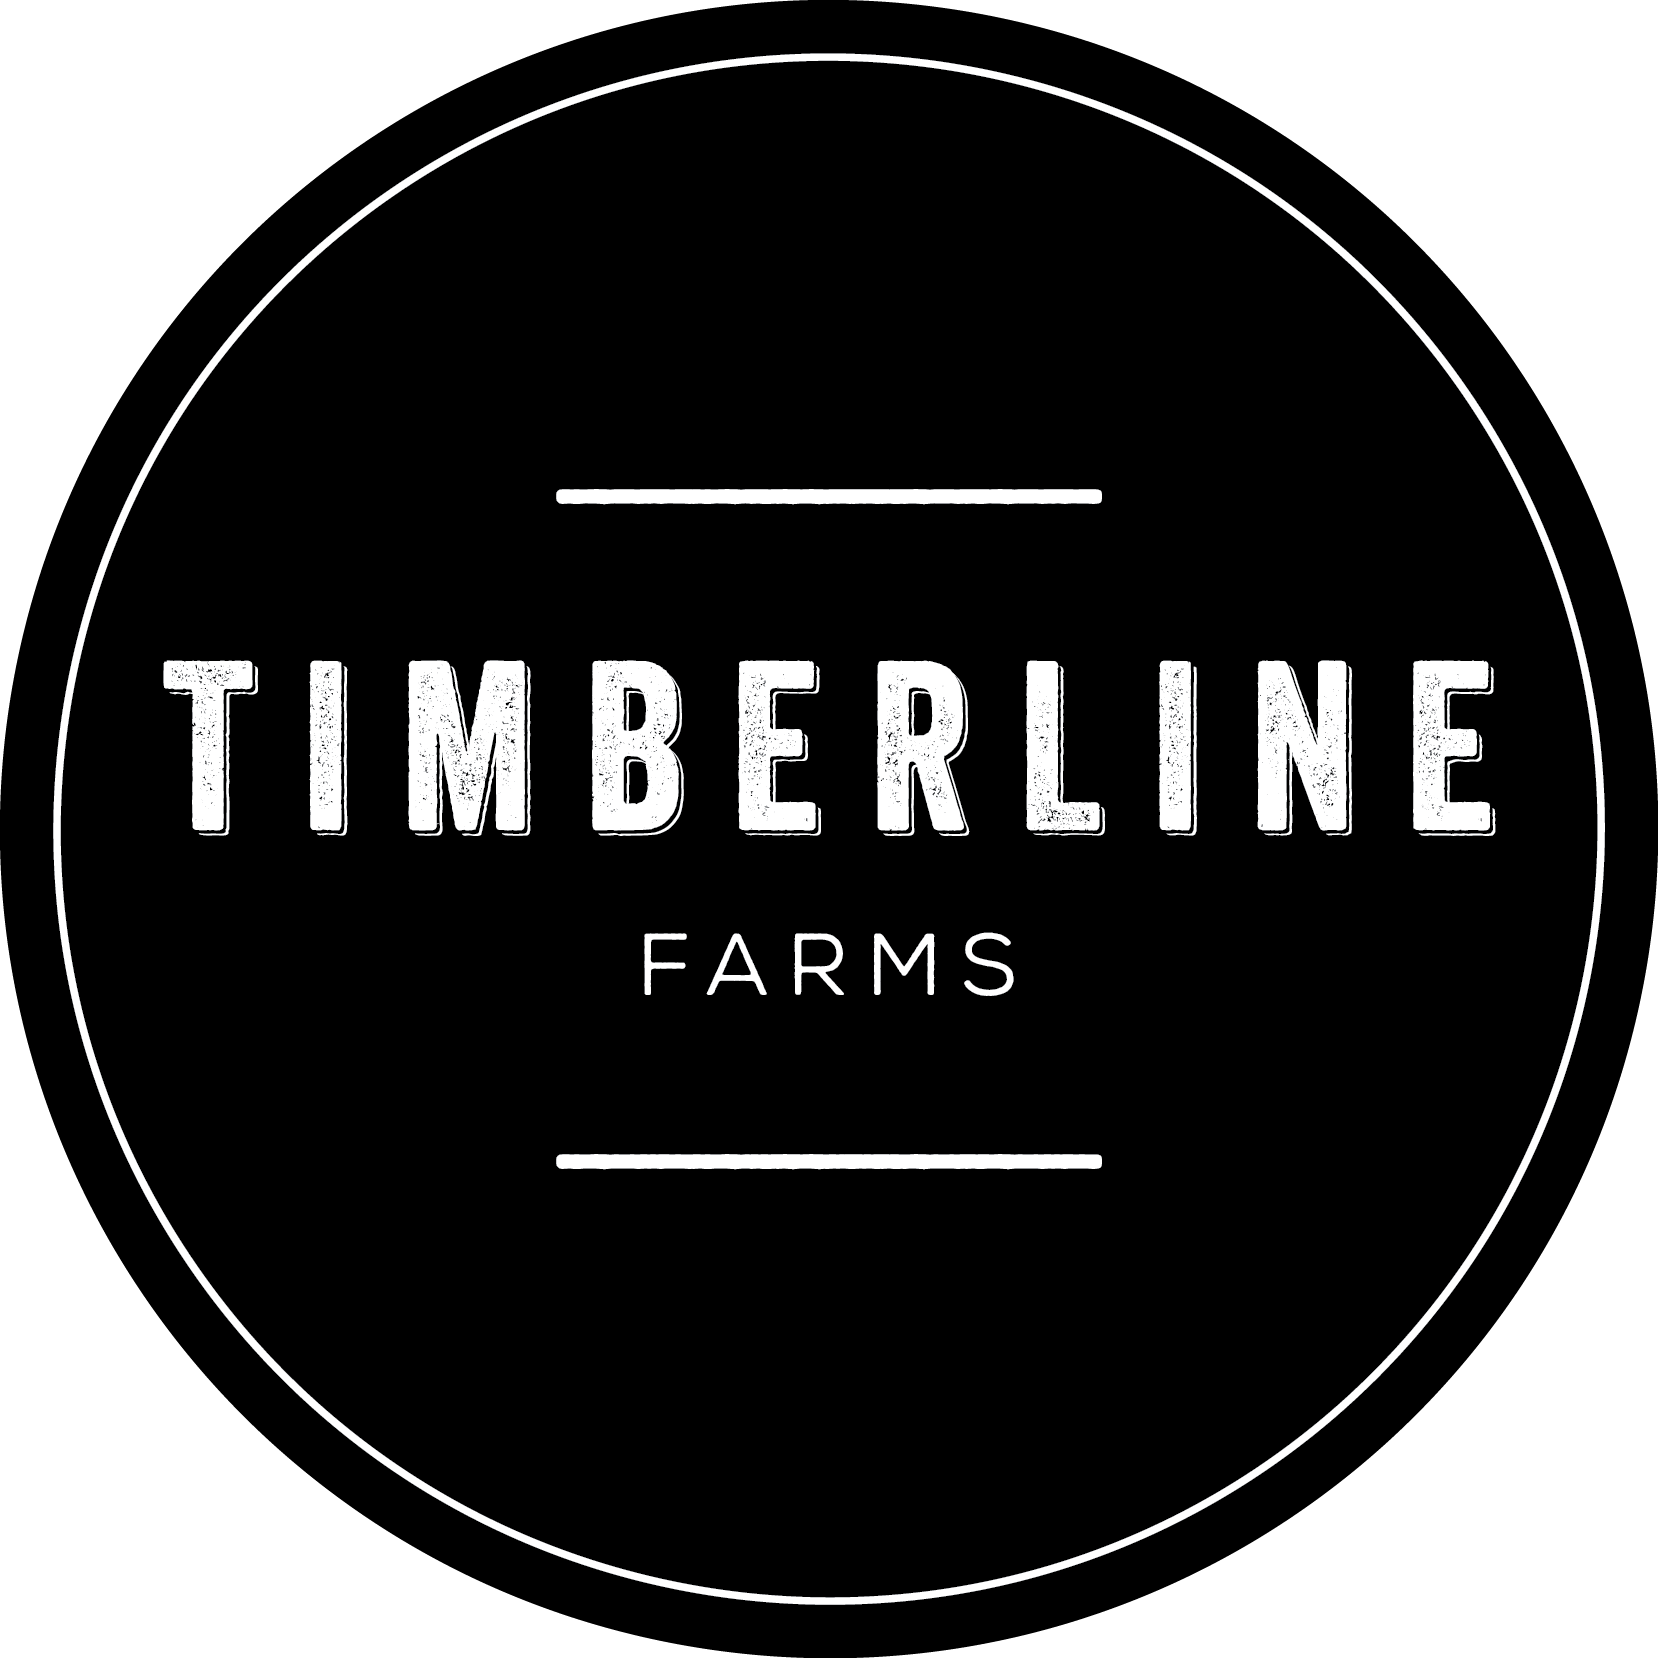 TIMBERLINE FARMS LOGO BUG